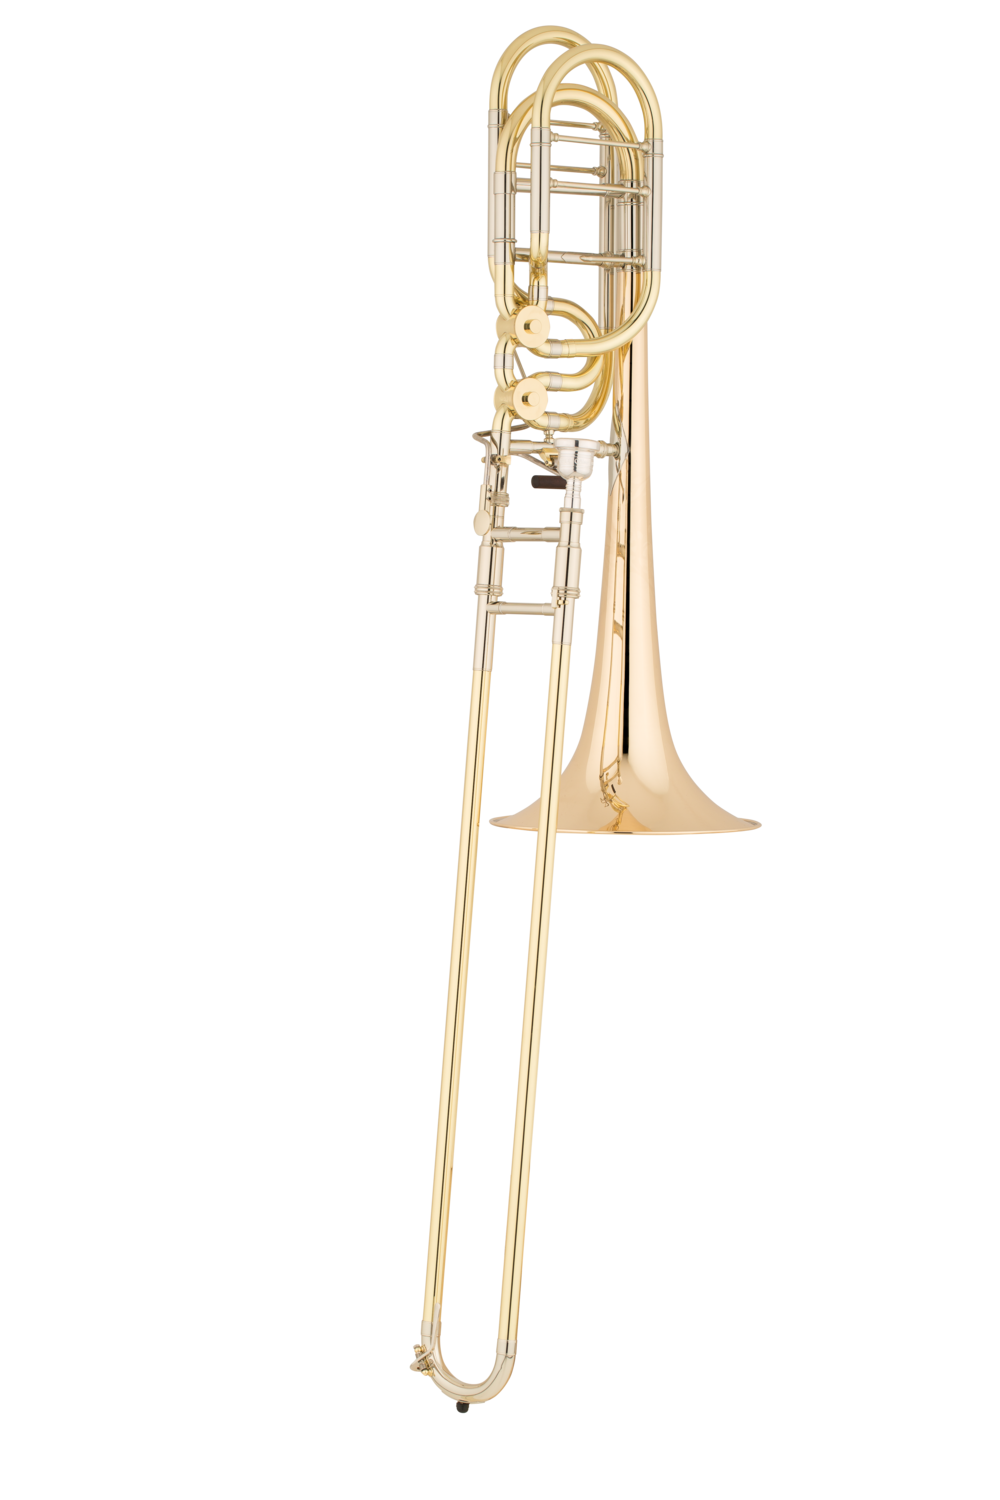 Trombone PNG Image